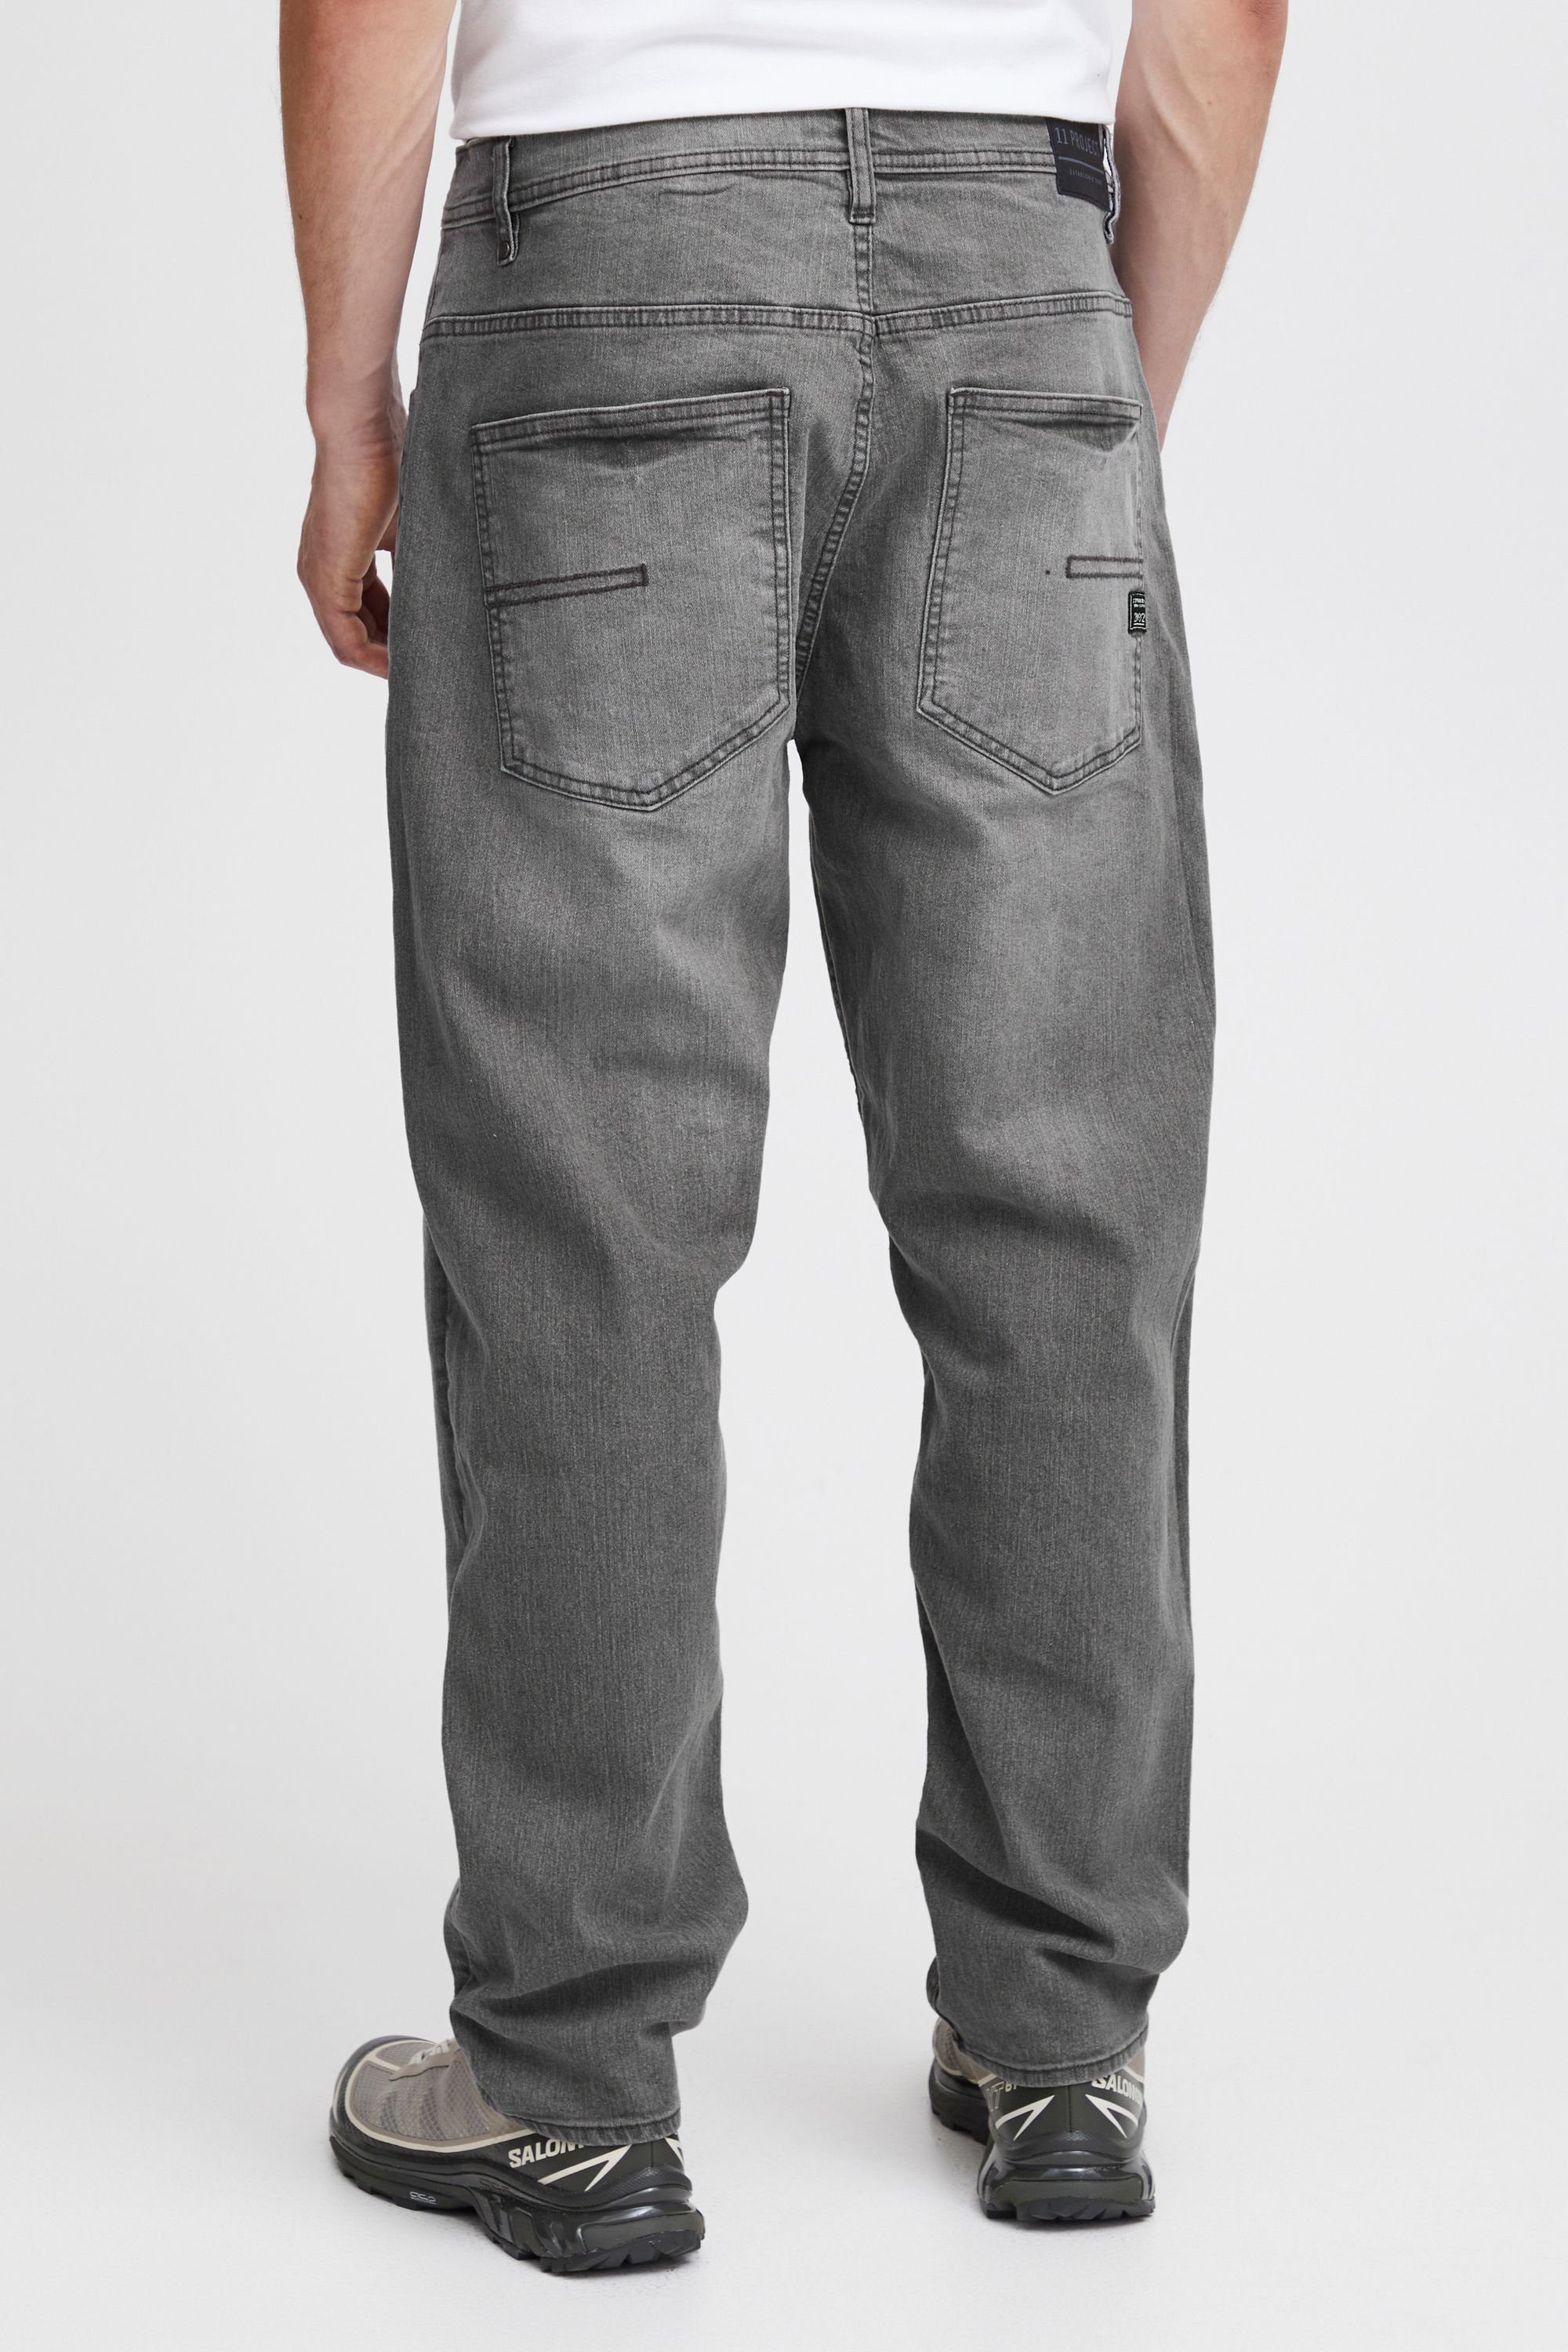 11 Project 11 Denim PRMads 5-Pocket-Jeans Project grey